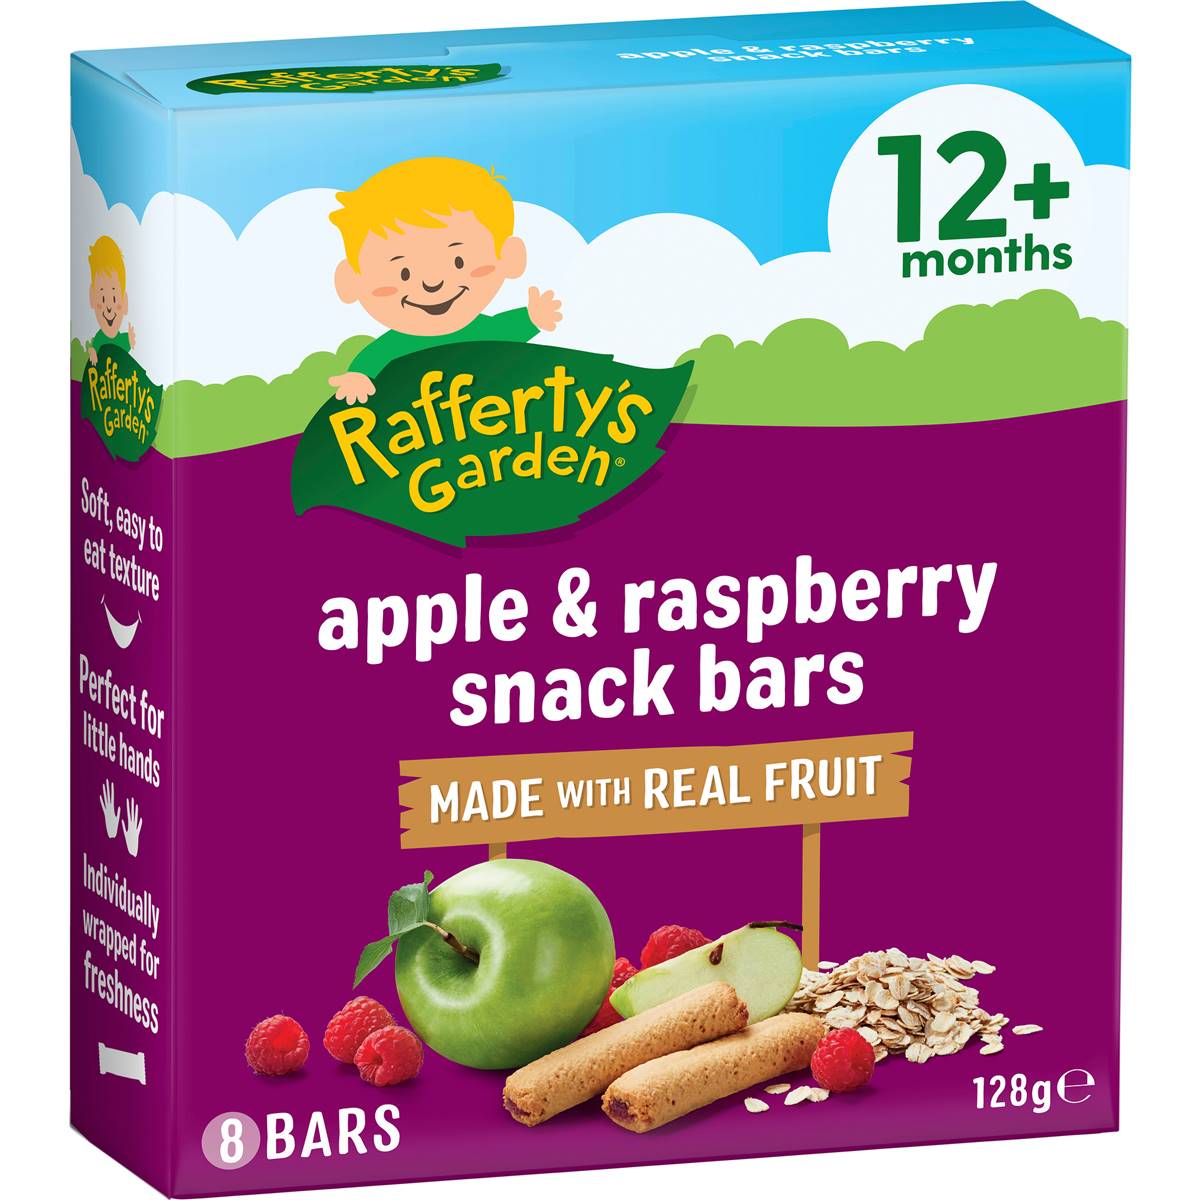 Calories in Rafferty's Garden Baby Snacks Apple & Raspberry Bars With Fruit 12+ Months